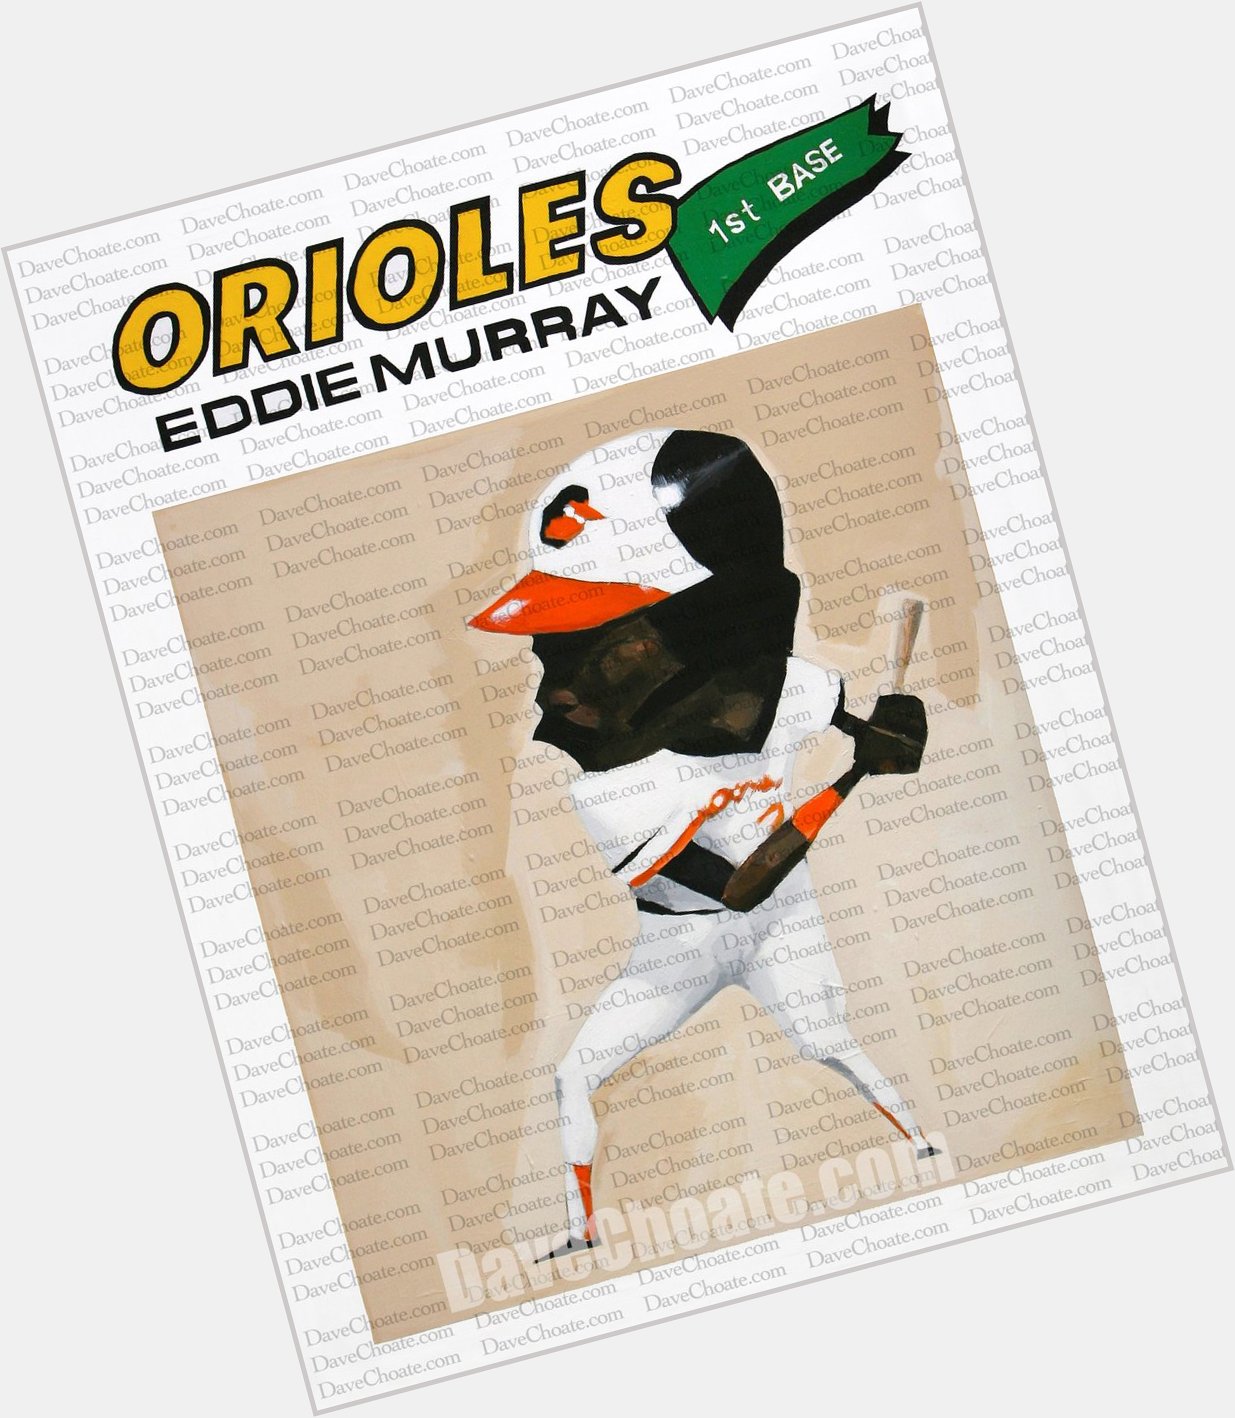 Happy Birthday to the Baltimore Orioles HOFer Eddie Murray. 